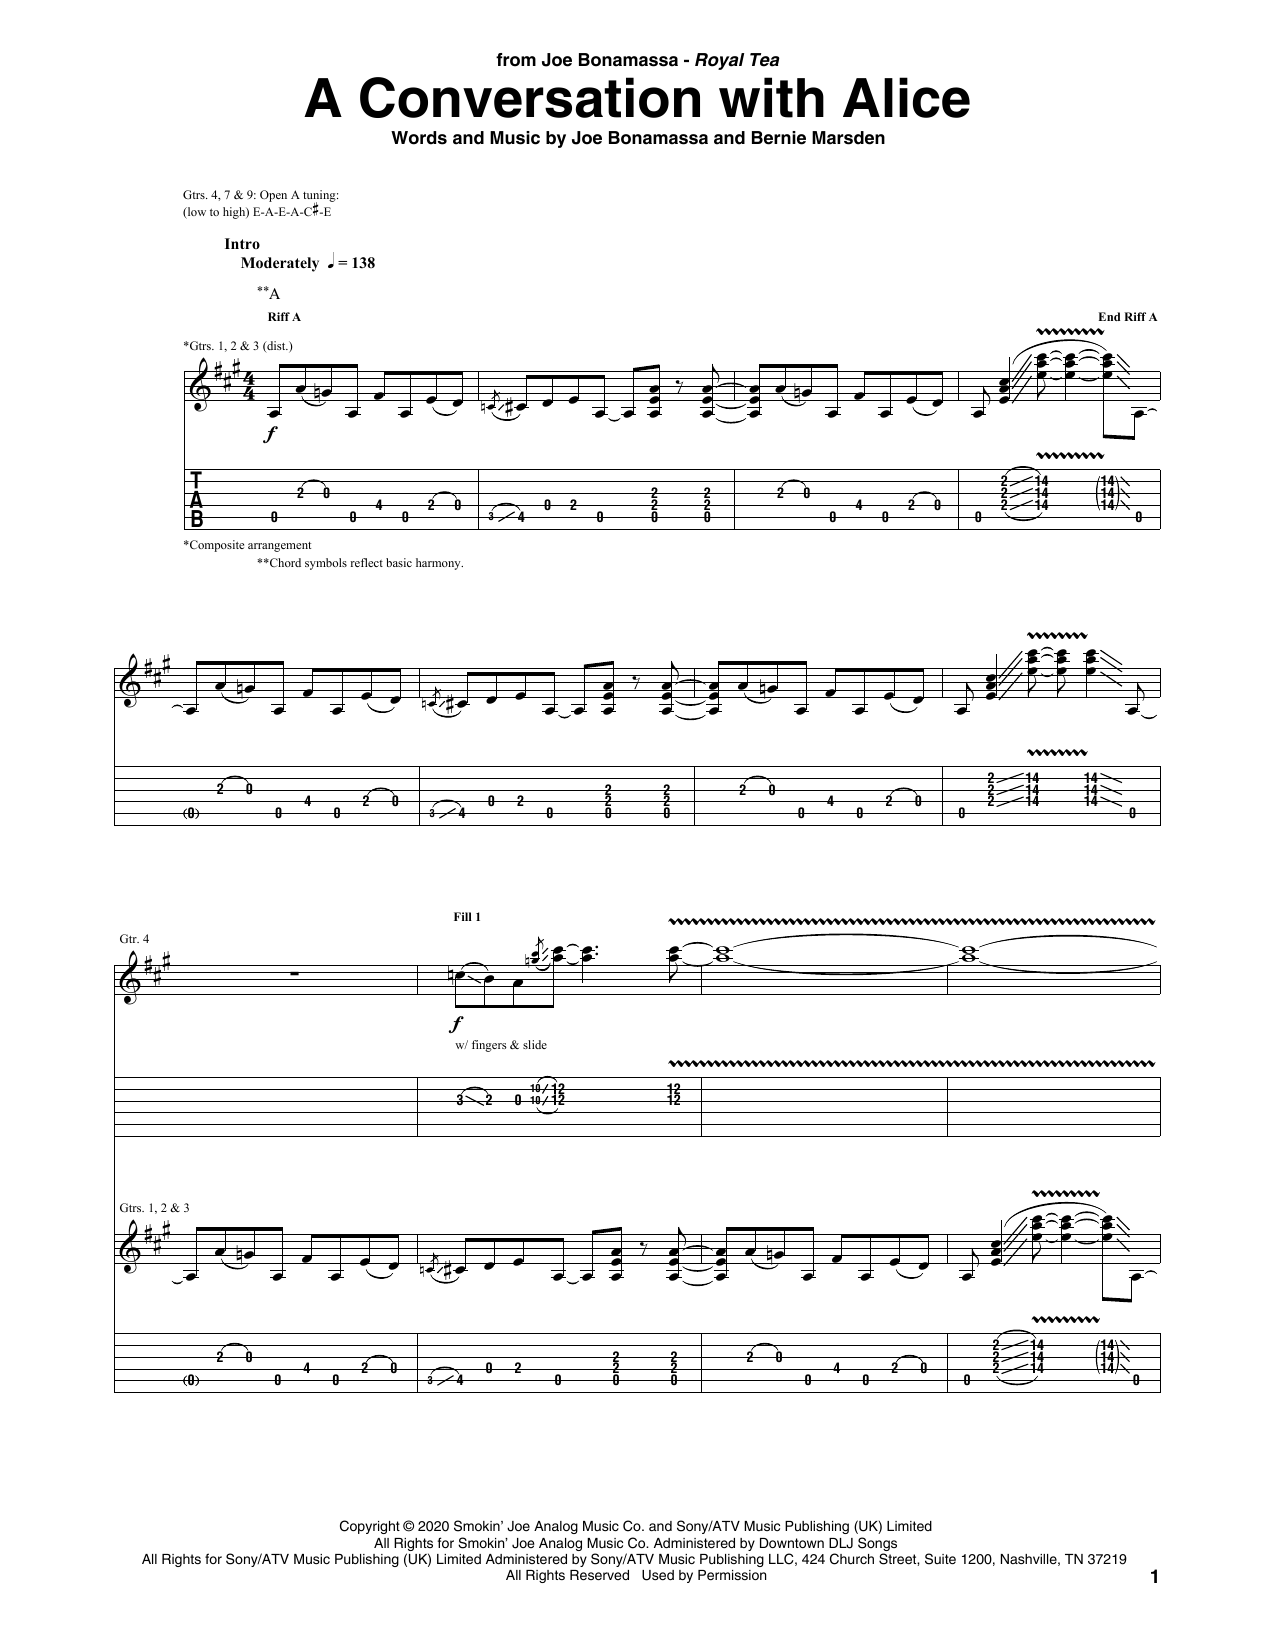 Joe Bonamassa A Conversation With Alice Sheet Music Notes & Chords for Guitar Tab - Download or Print PDF